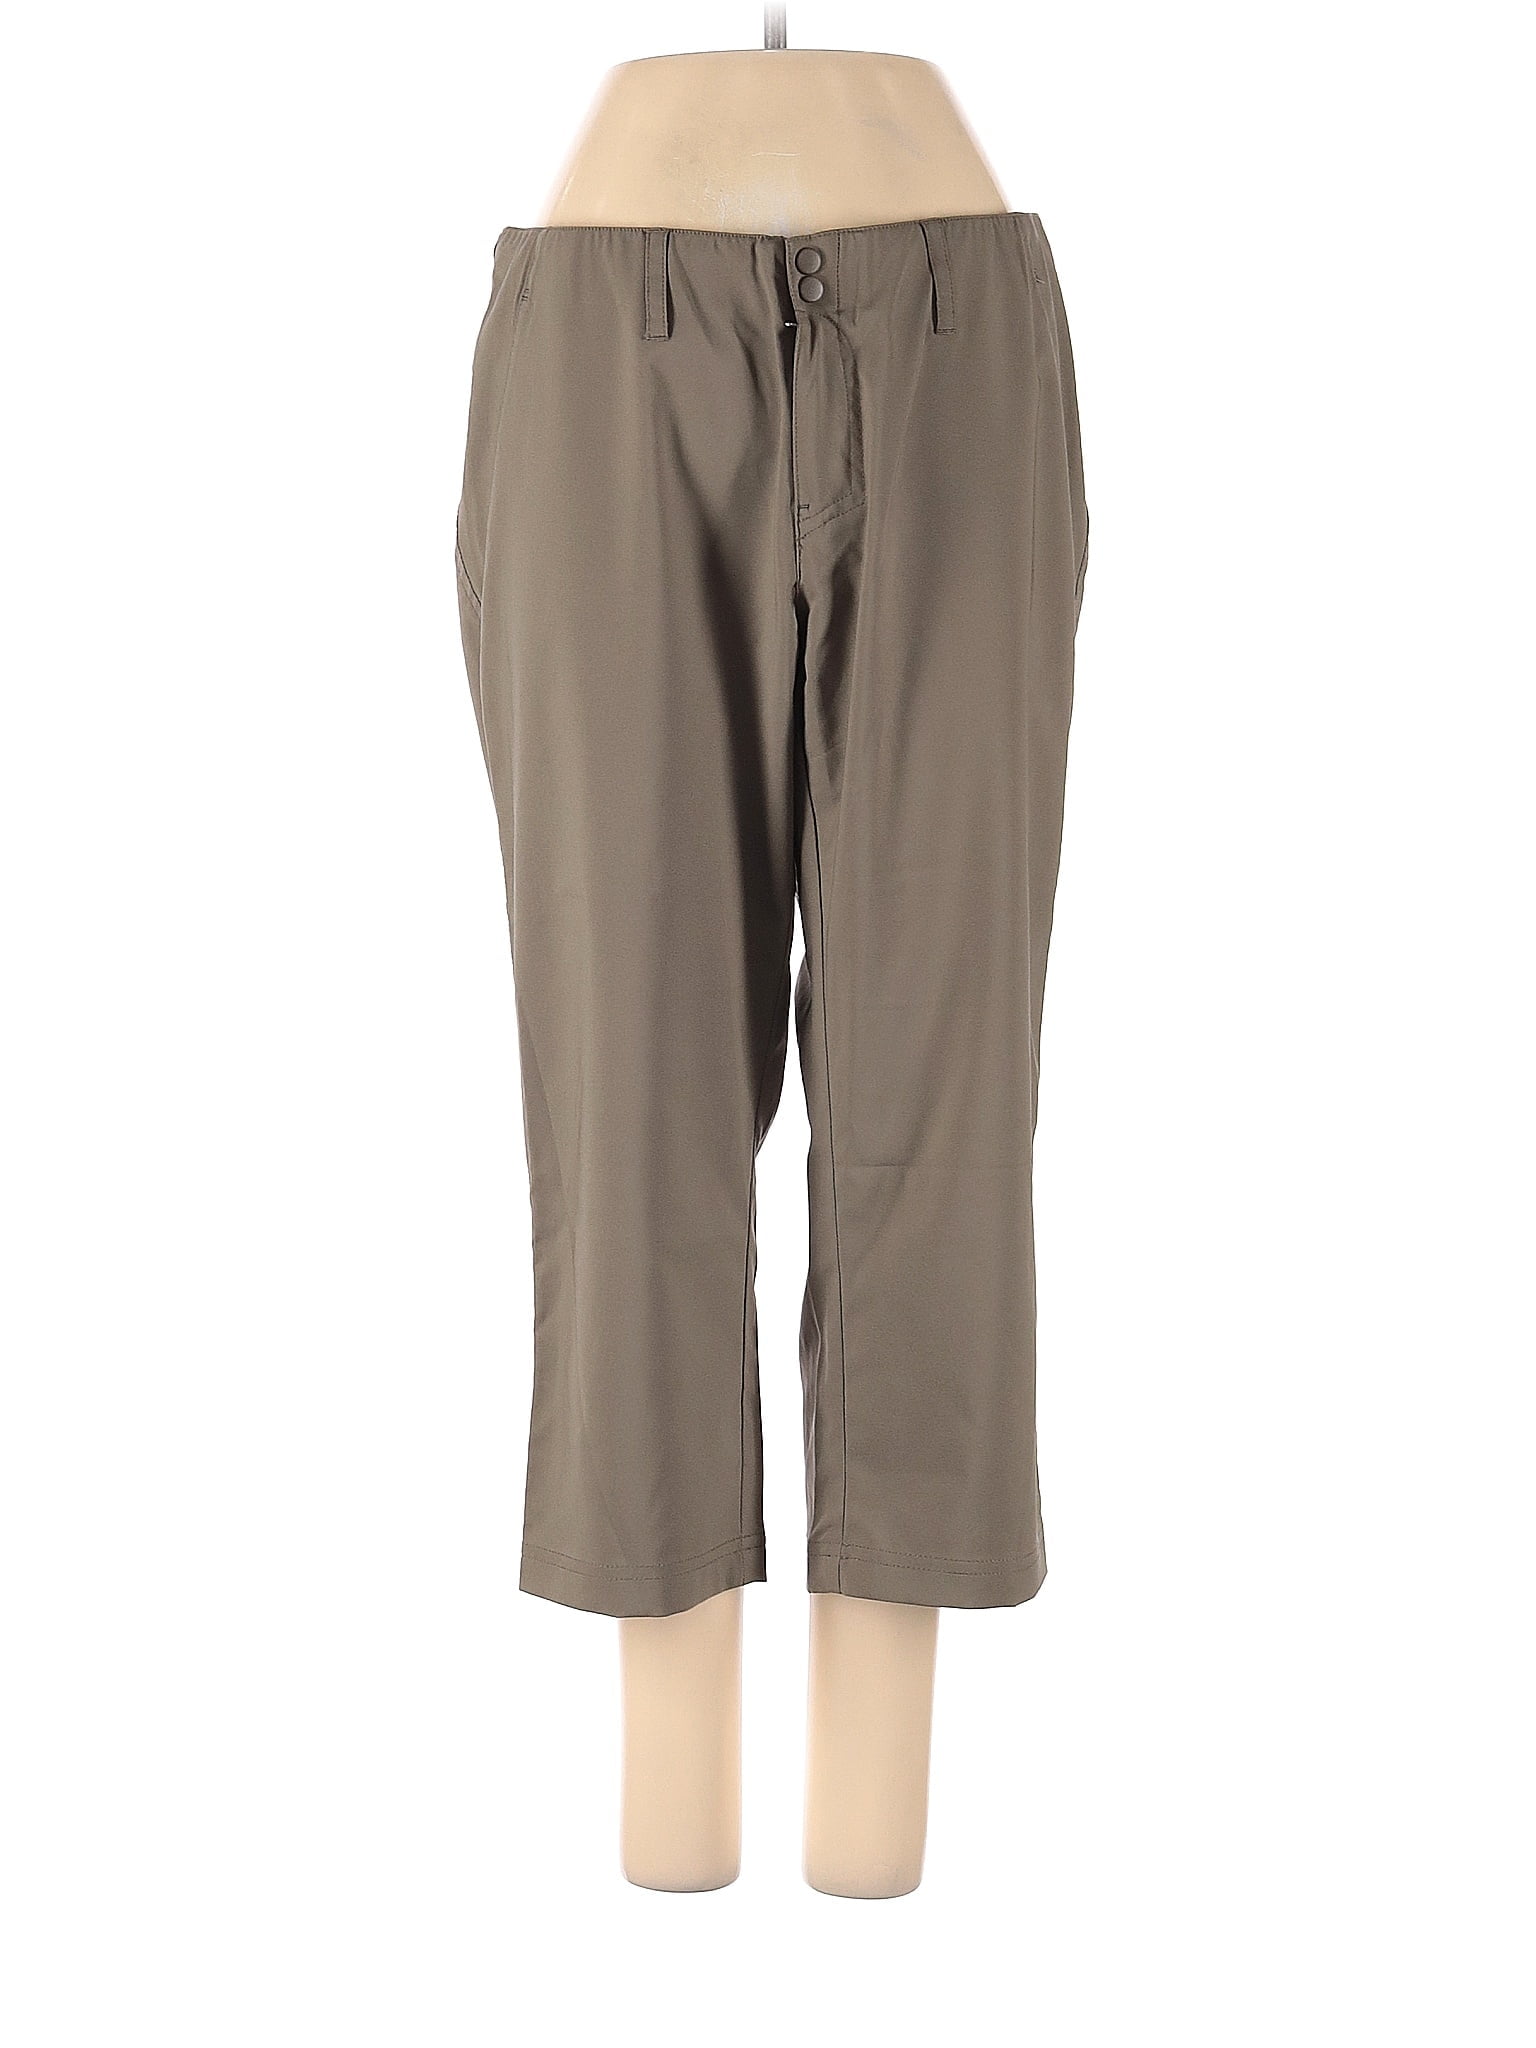 Pre-Owned Merrell Women's Size 4 Casual Pants - Walmart.com